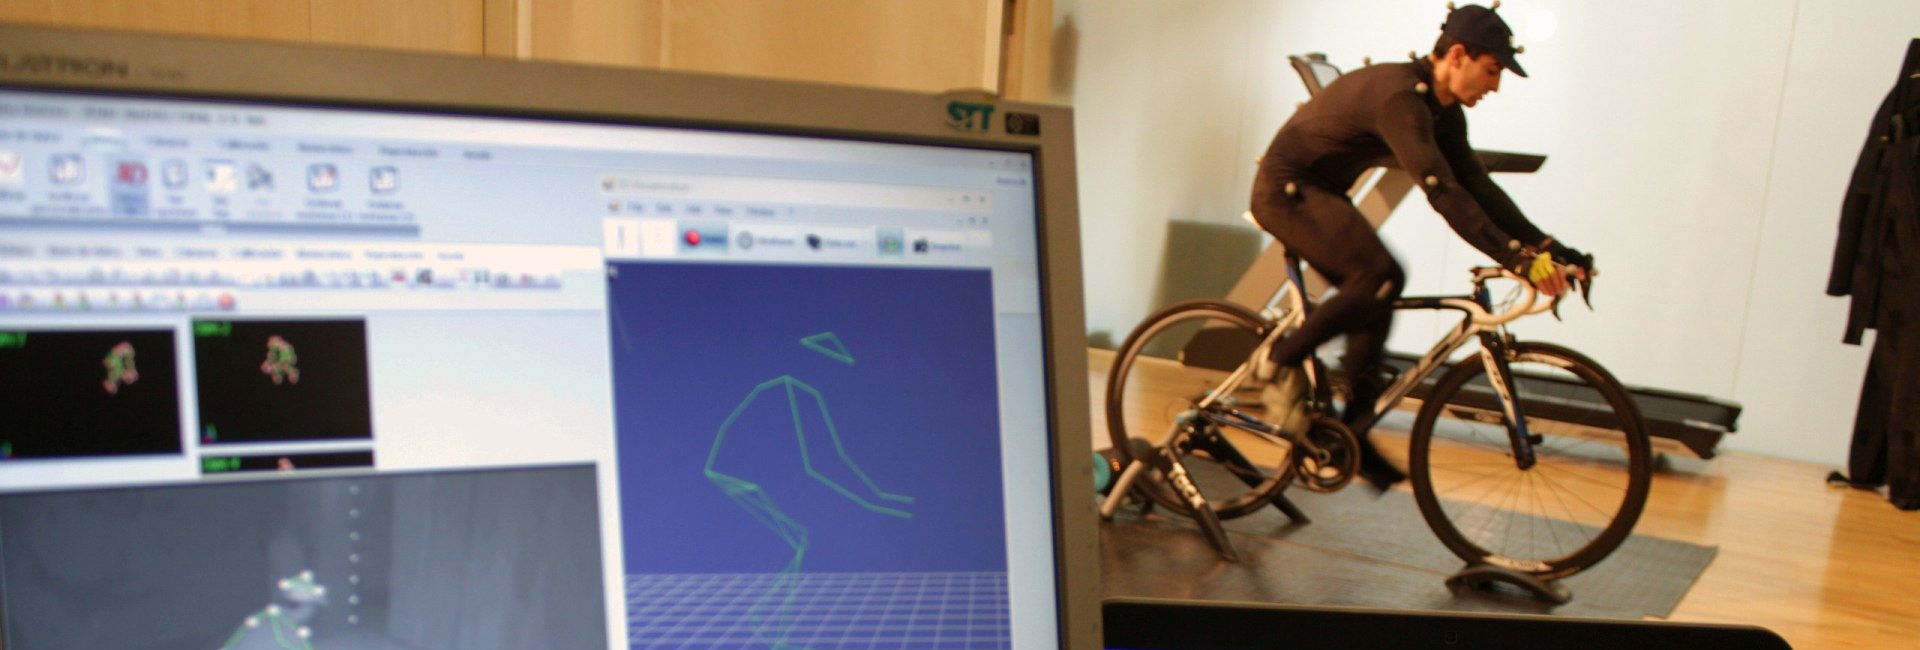 Athlete cyclist monitoring performance using sensory equipment 